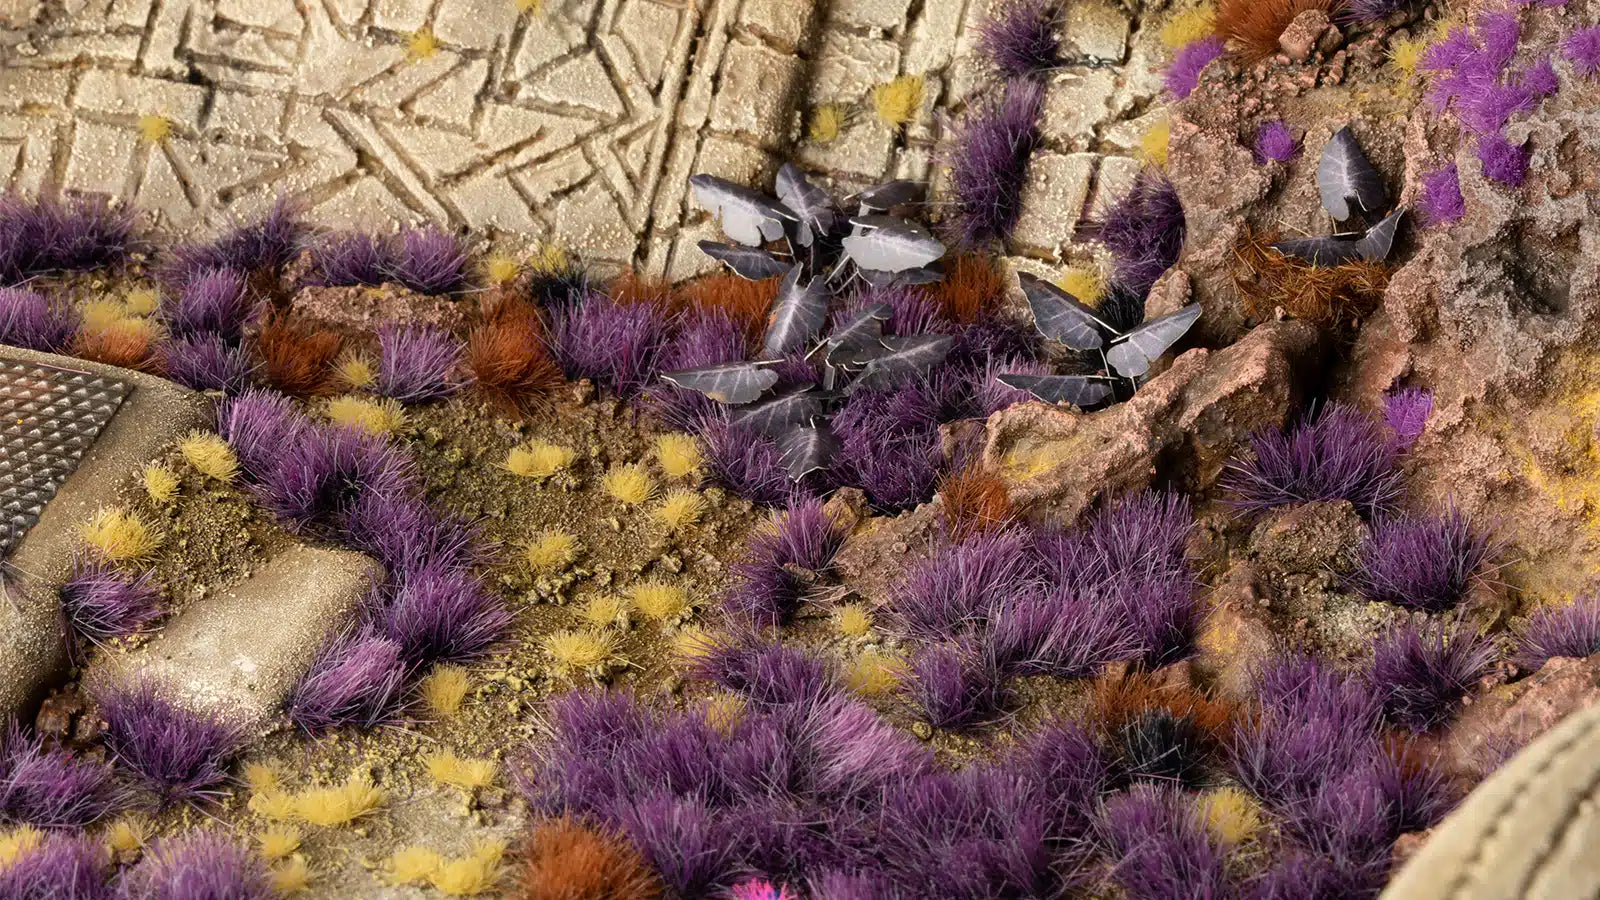 Gamers Grass Tufts Alien Purple 6mm (Wild) - Loaded Dice Barry Vale of Glamorgan CF64 3HD